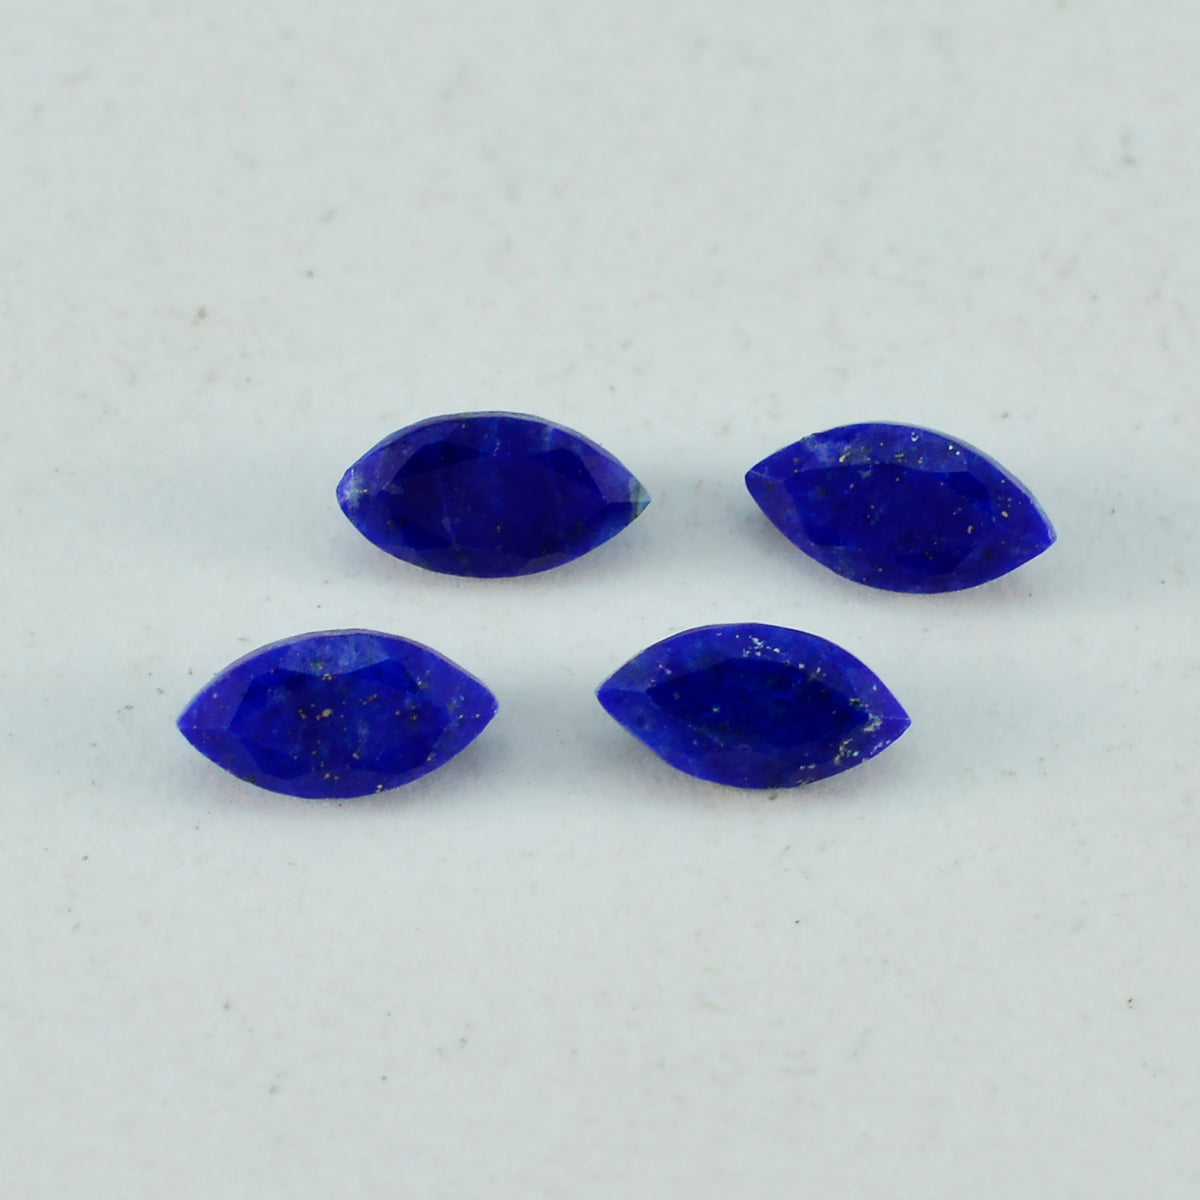 riyogems 1 st naturlig blå lapis lazuli facetterad 8x16 mm marquise form a1 kvalitetsädelsten